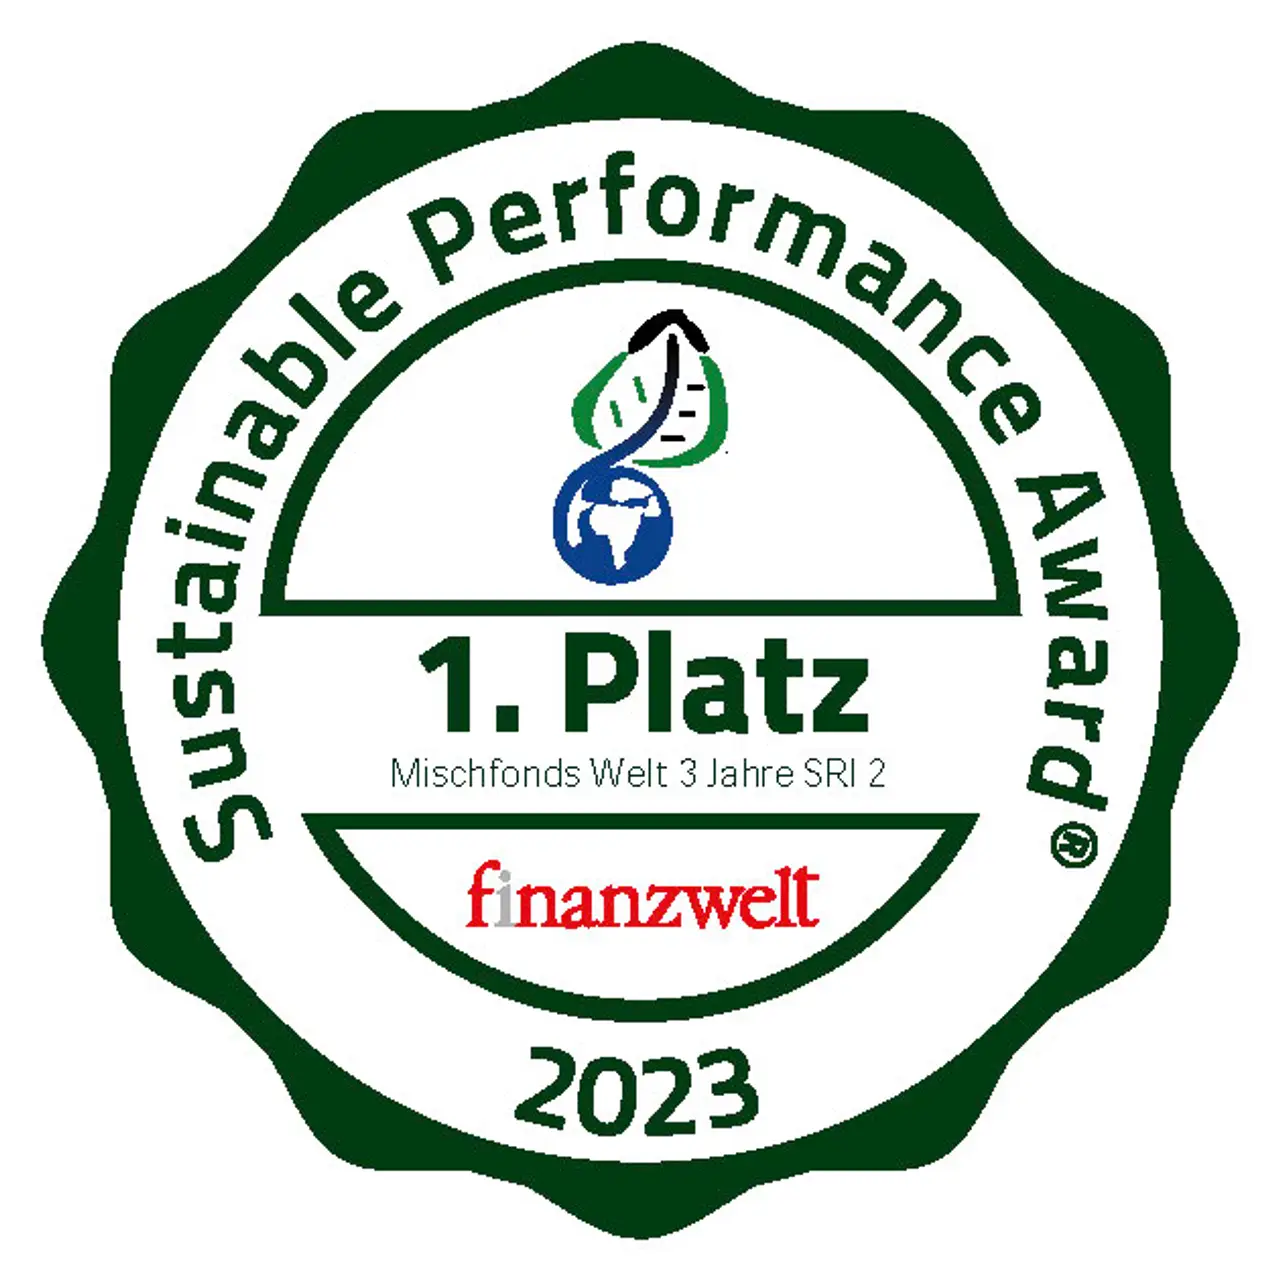 Sustainable Performance Award 2023